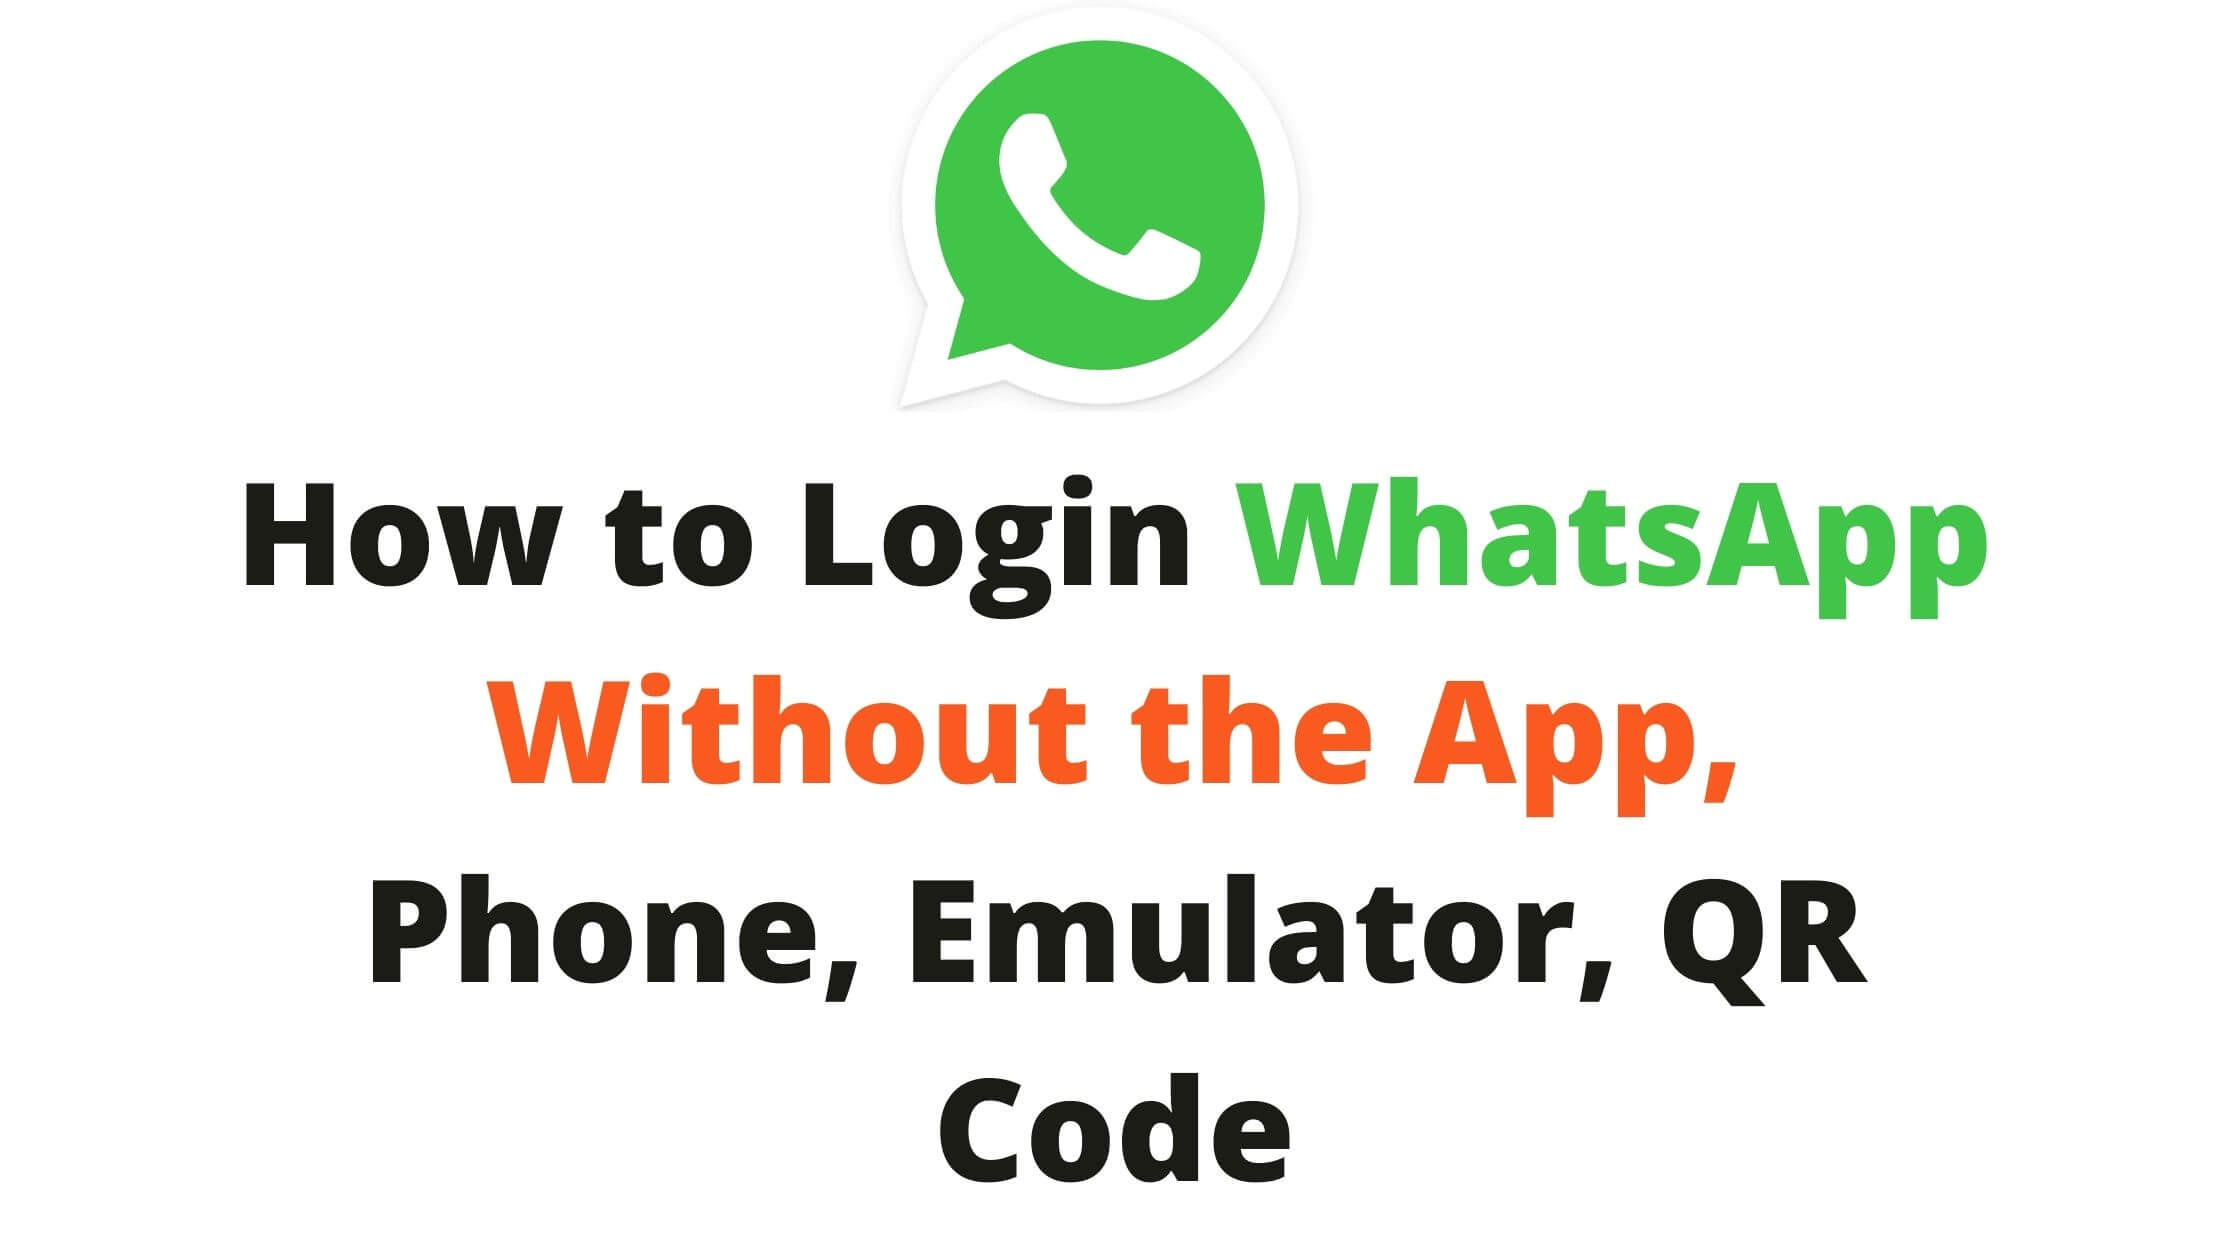 How to Login to Whatsapp